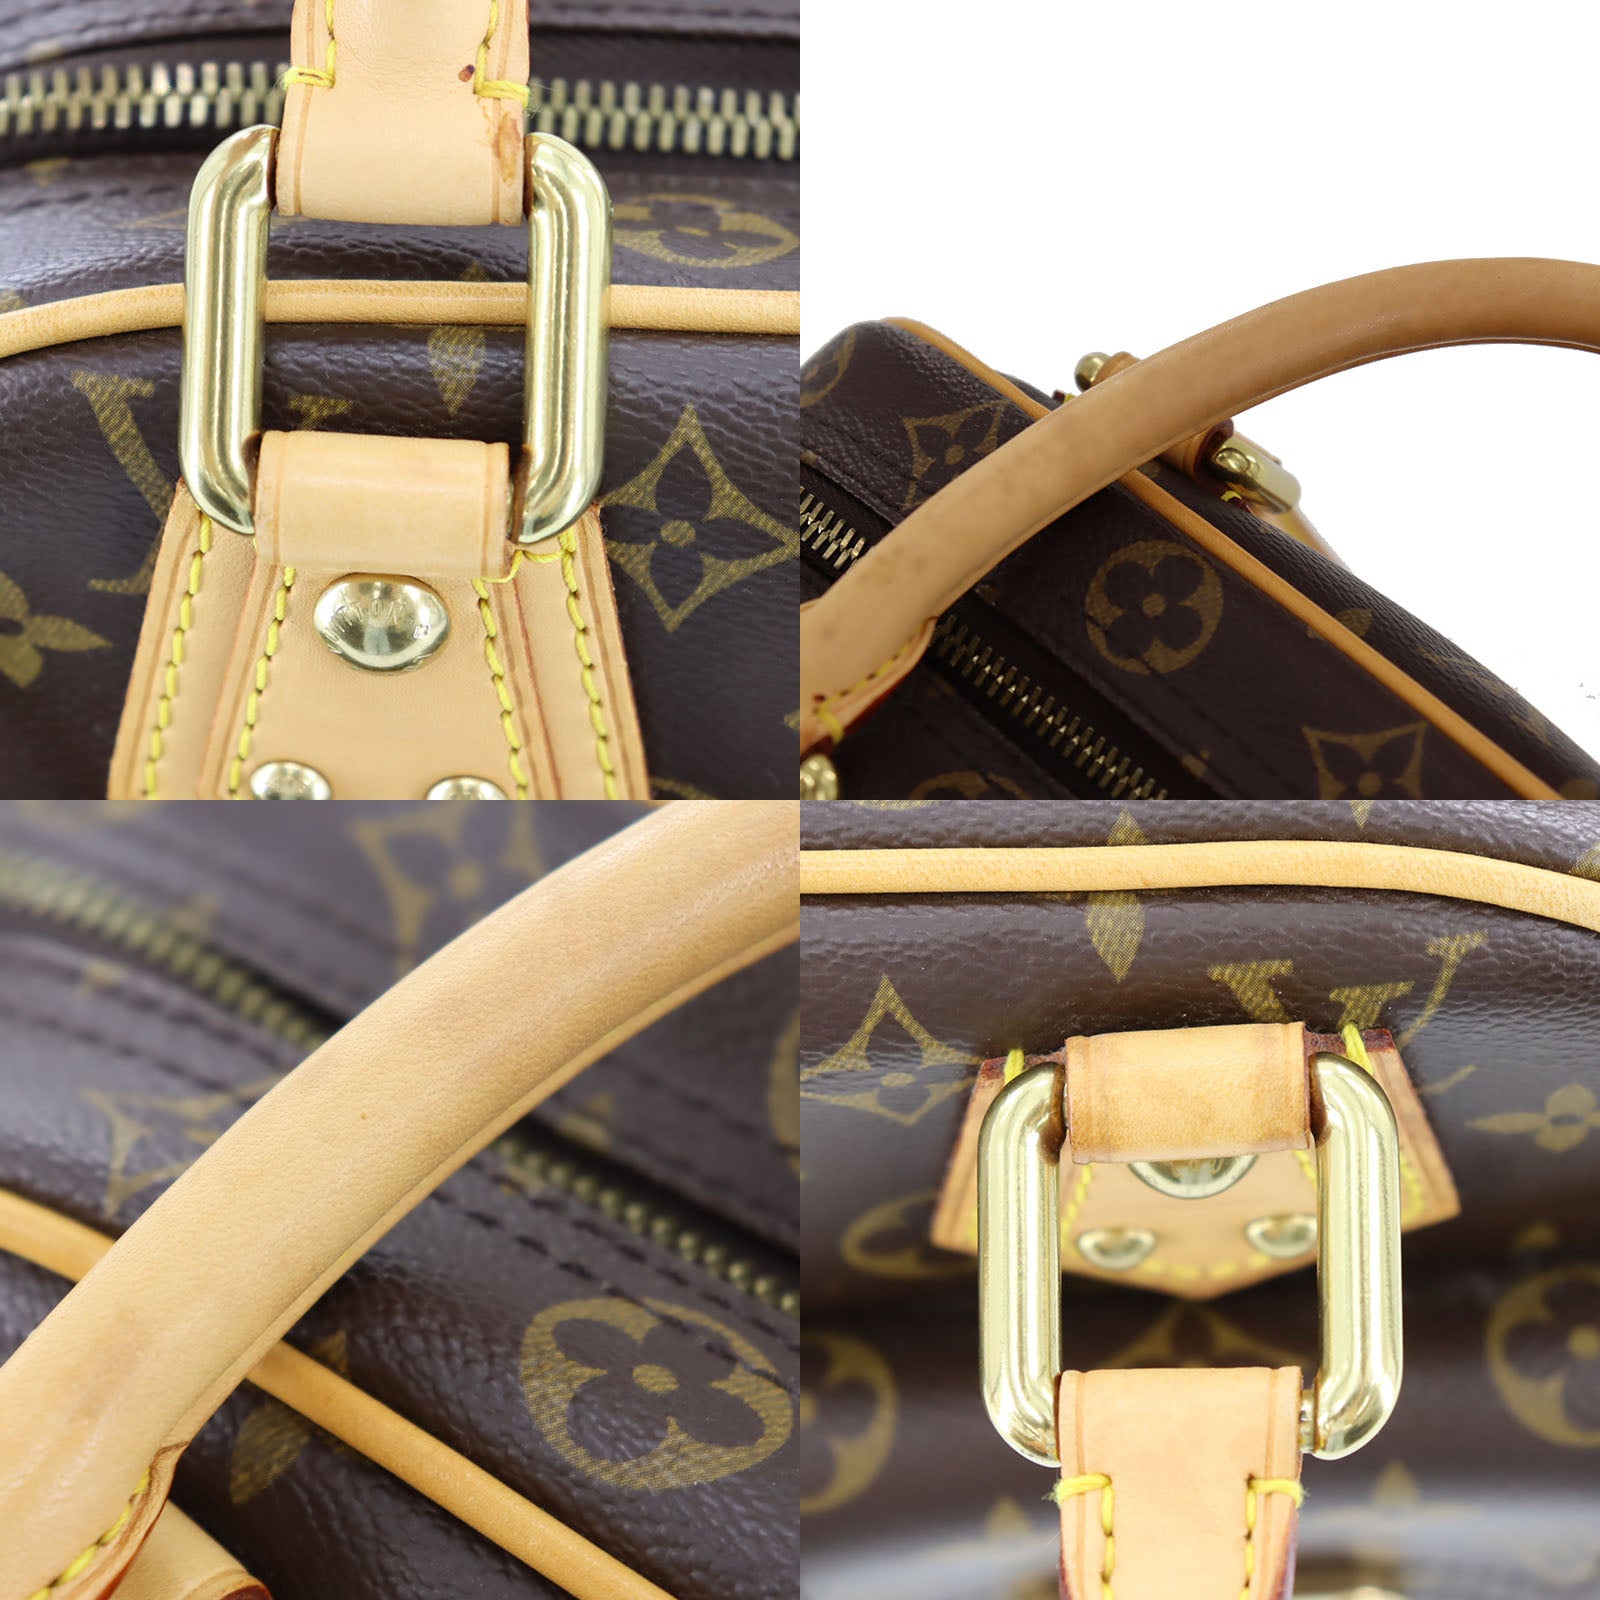 Louis Vuitton, Bags, Used Louis Vuitton Speedy 3